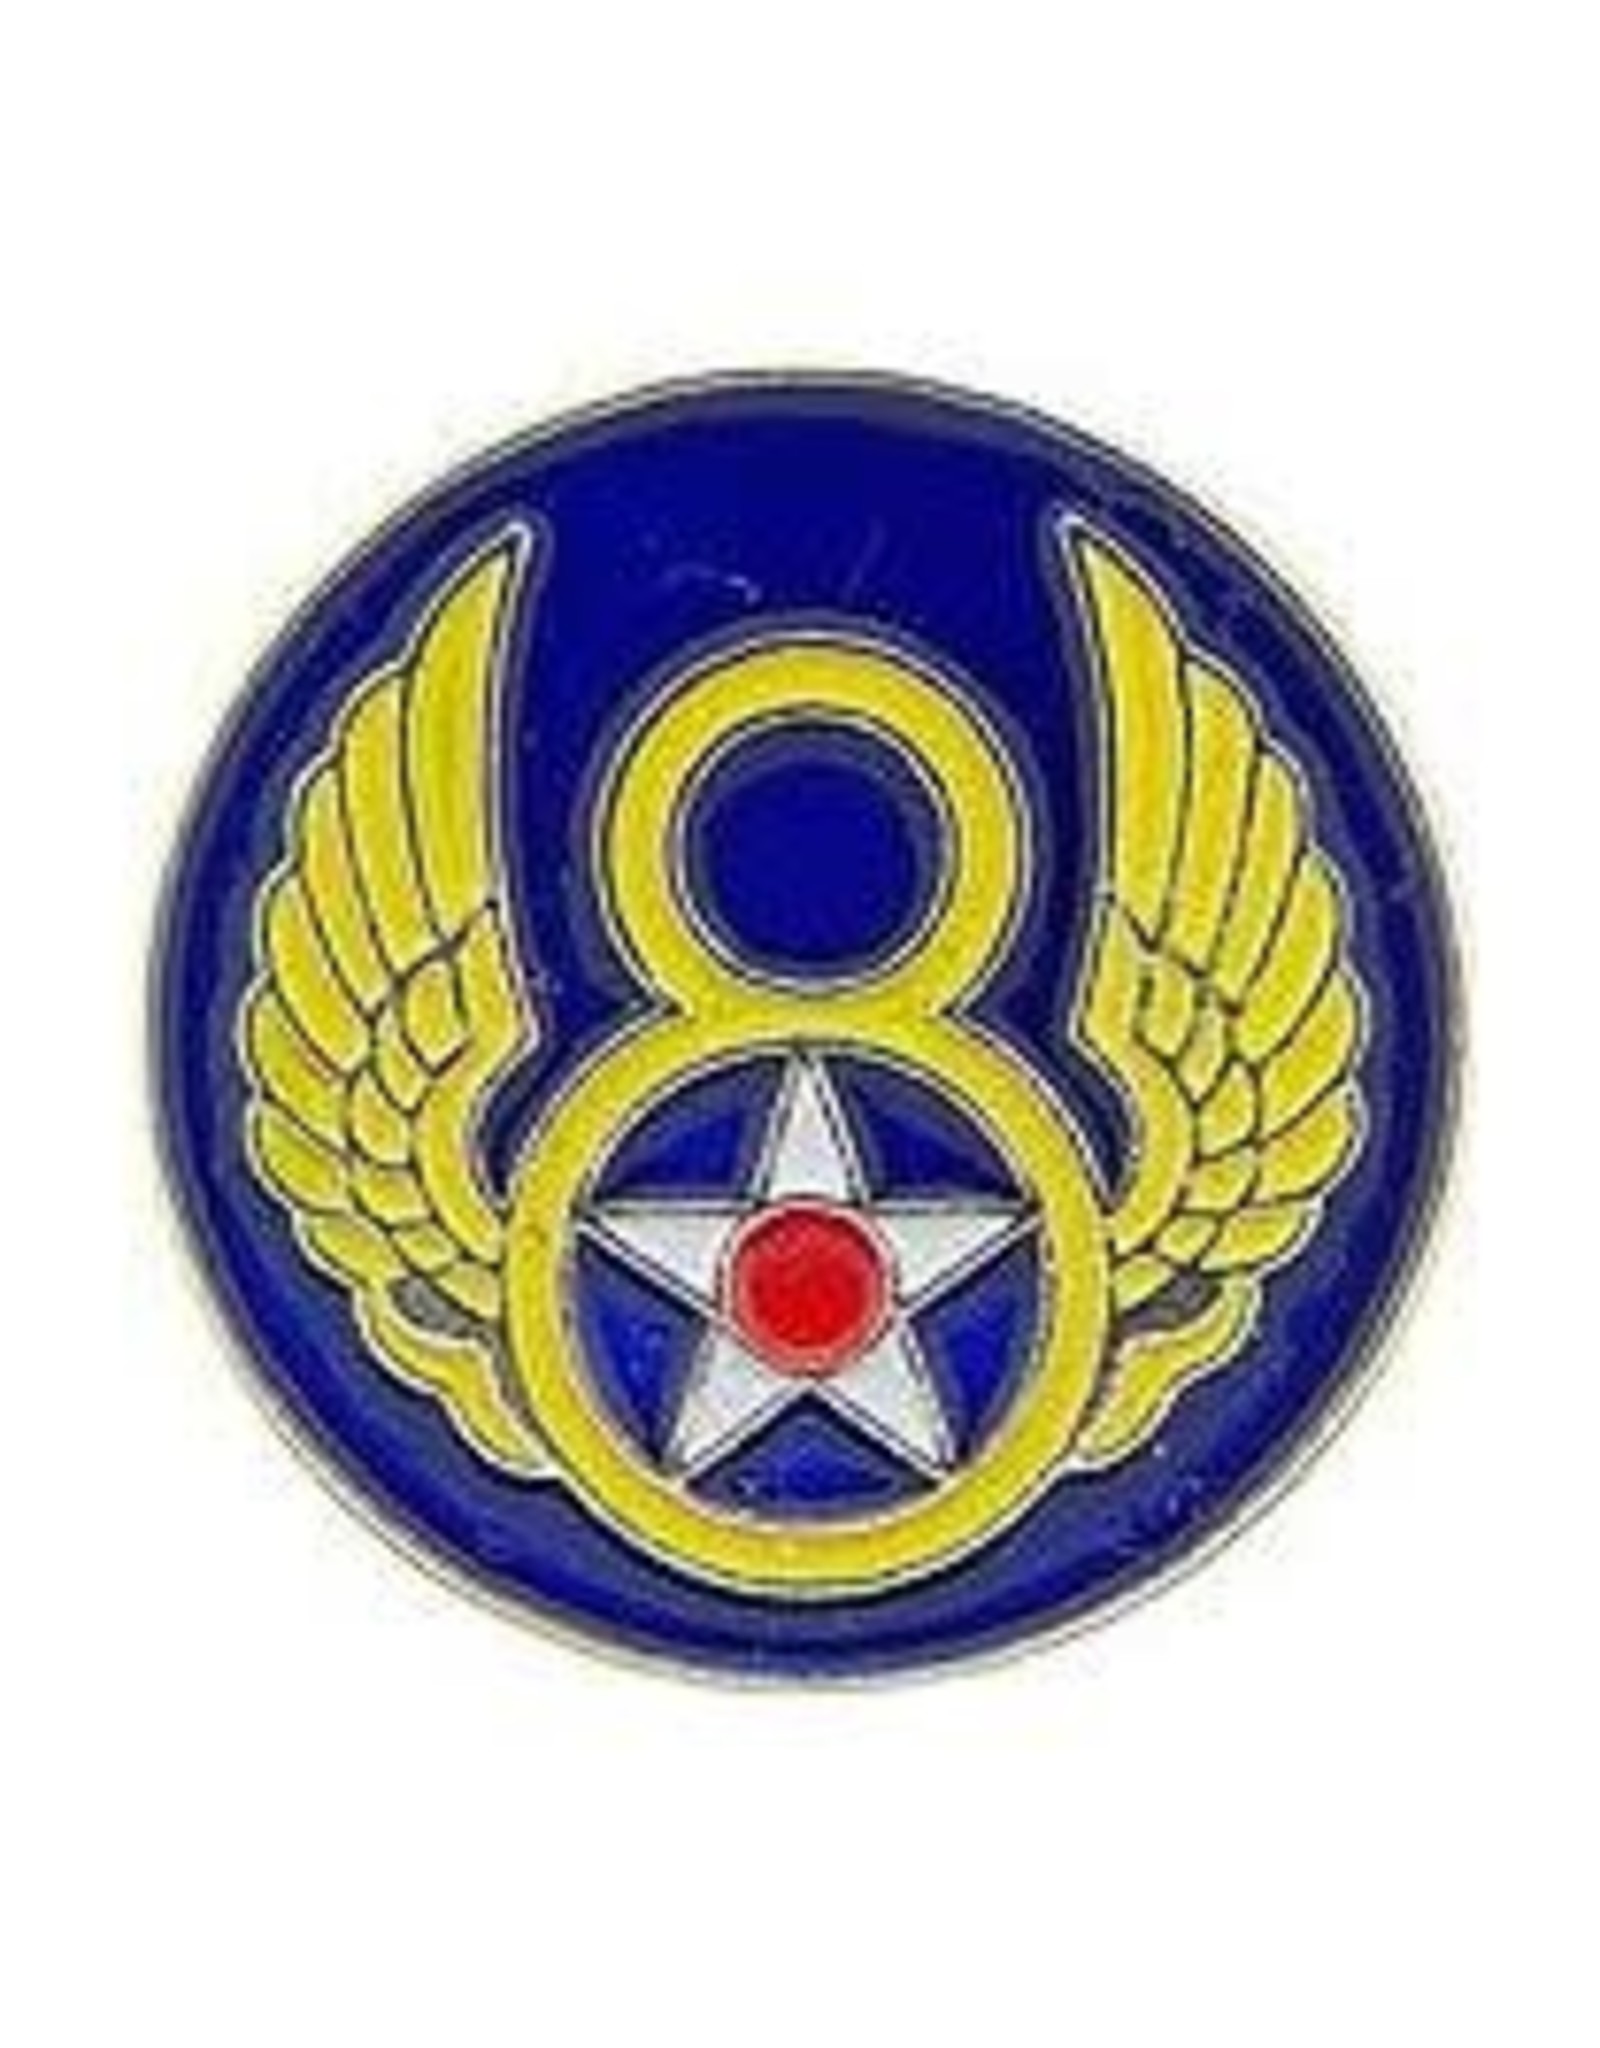 Pin - USAF 8th